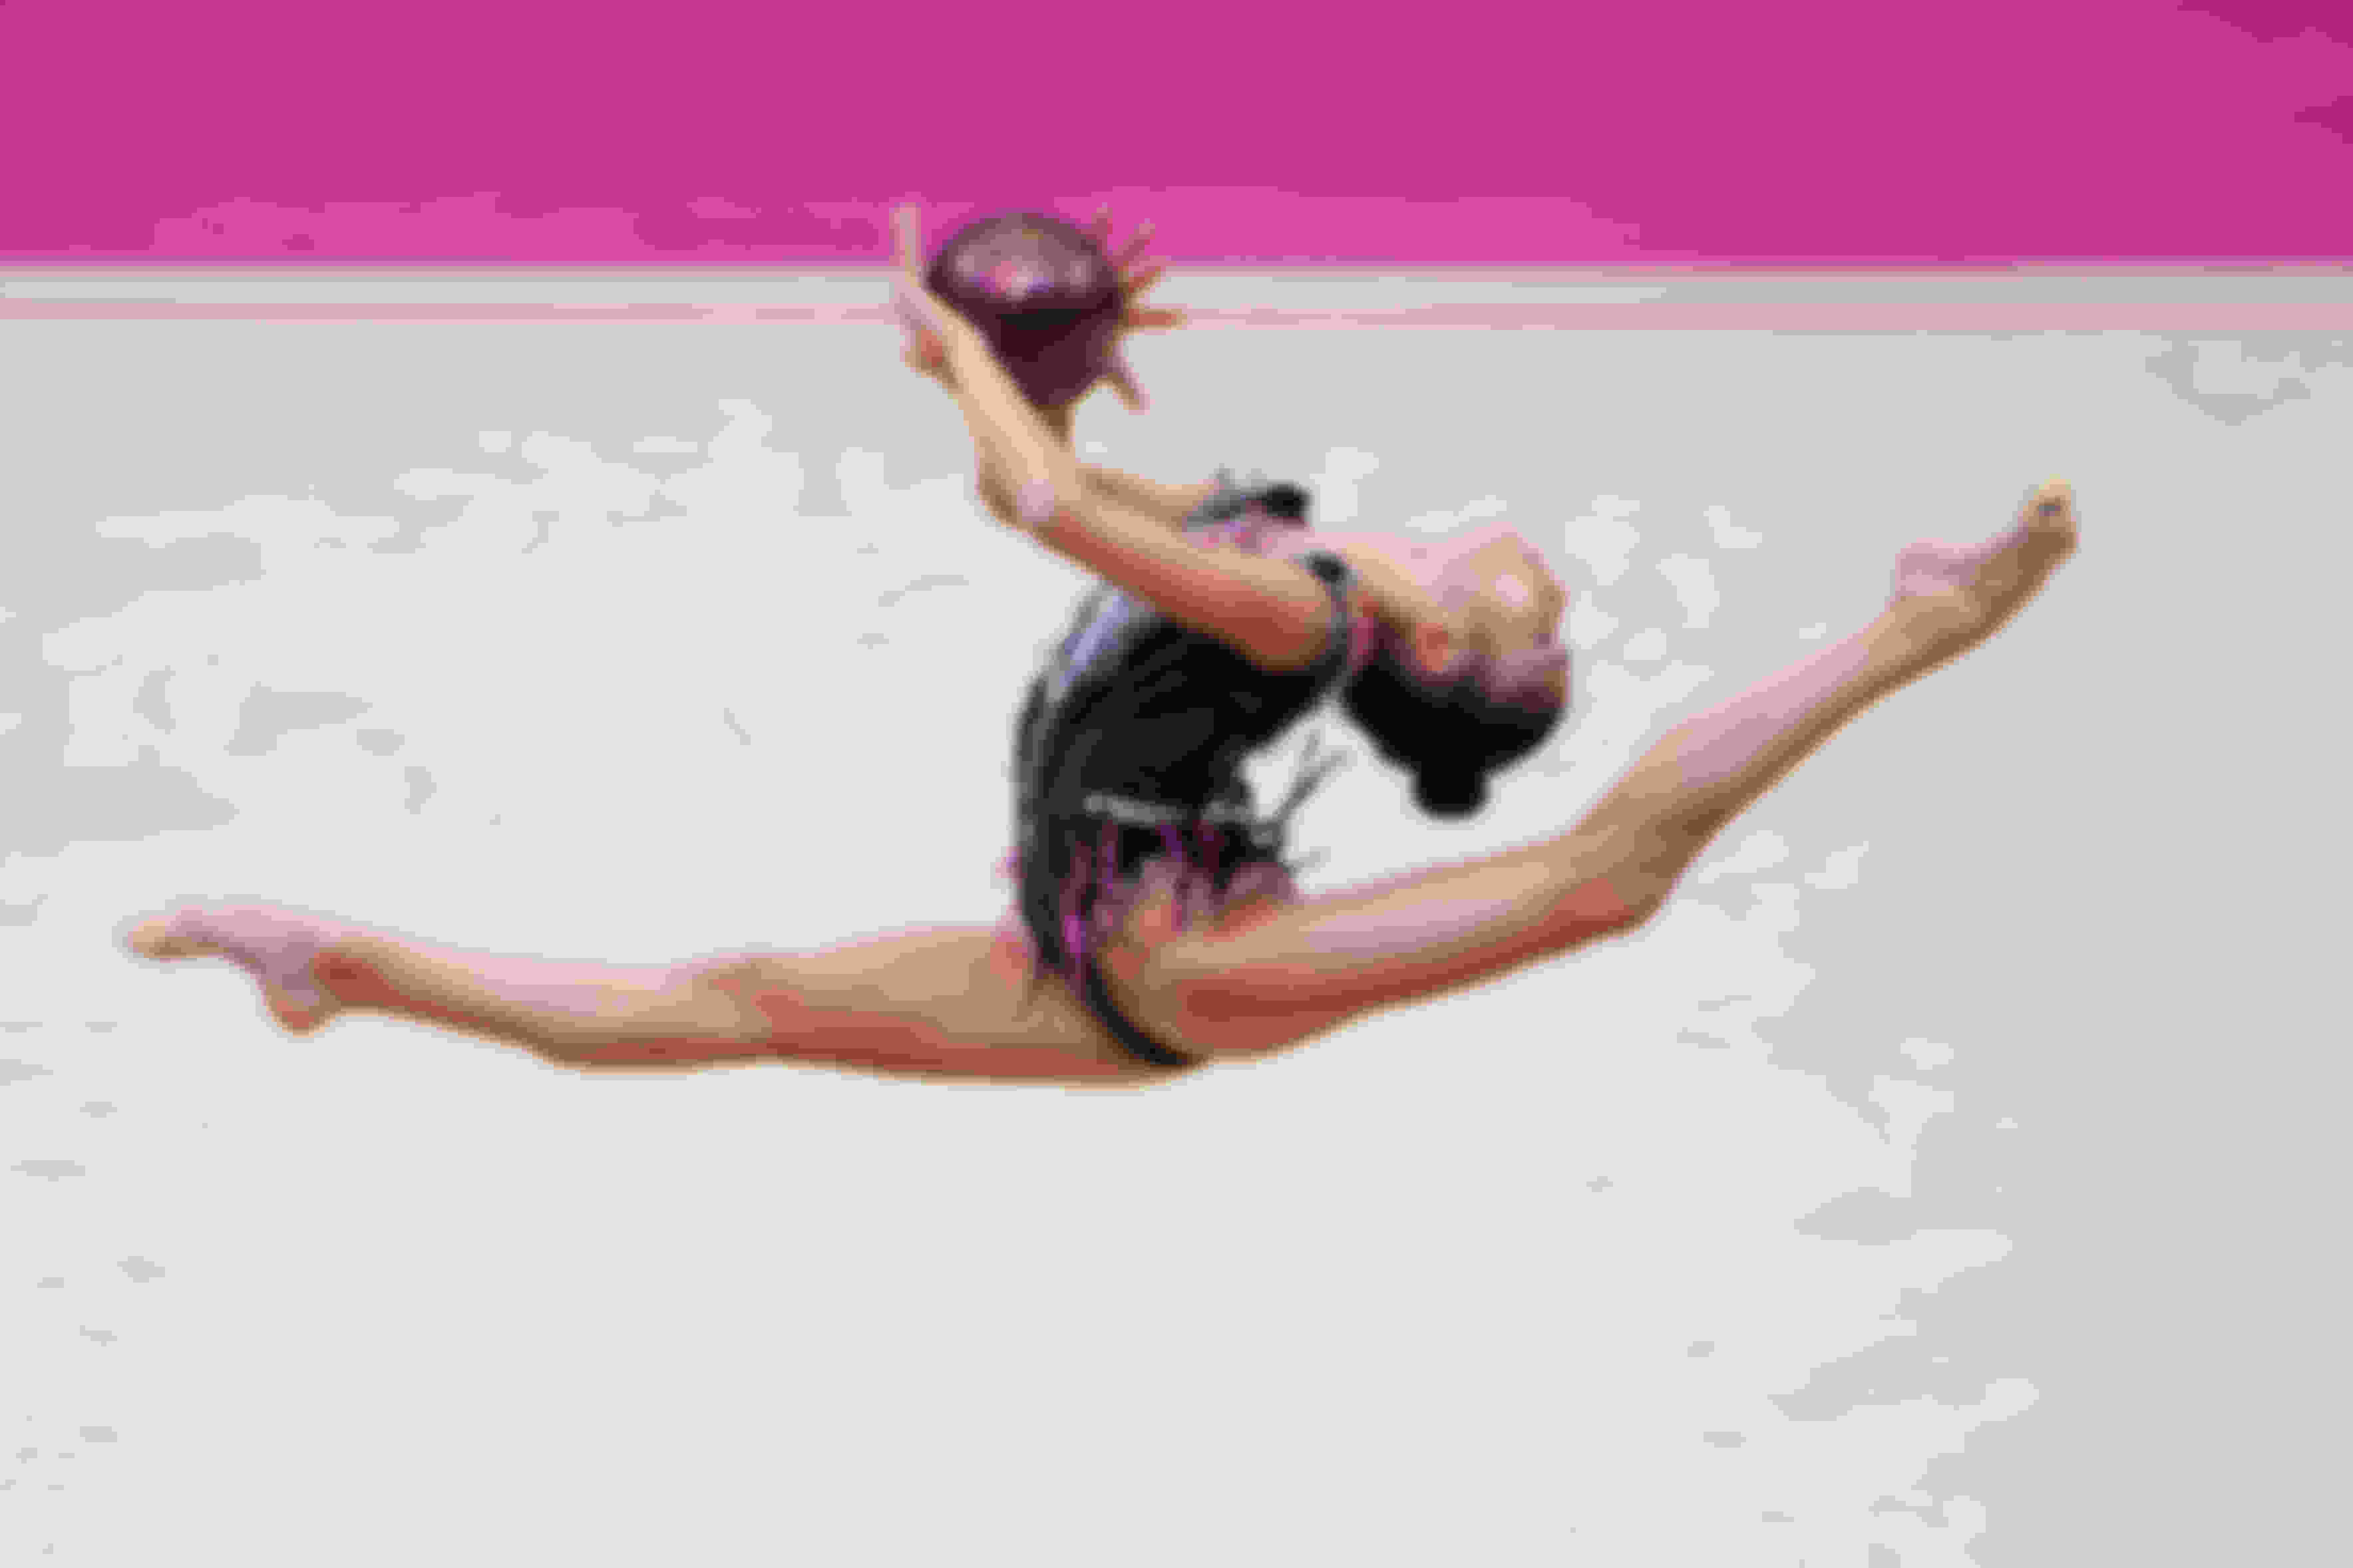 How to qualify for rhythmic gymnastics at Paris 2024. The Olympics